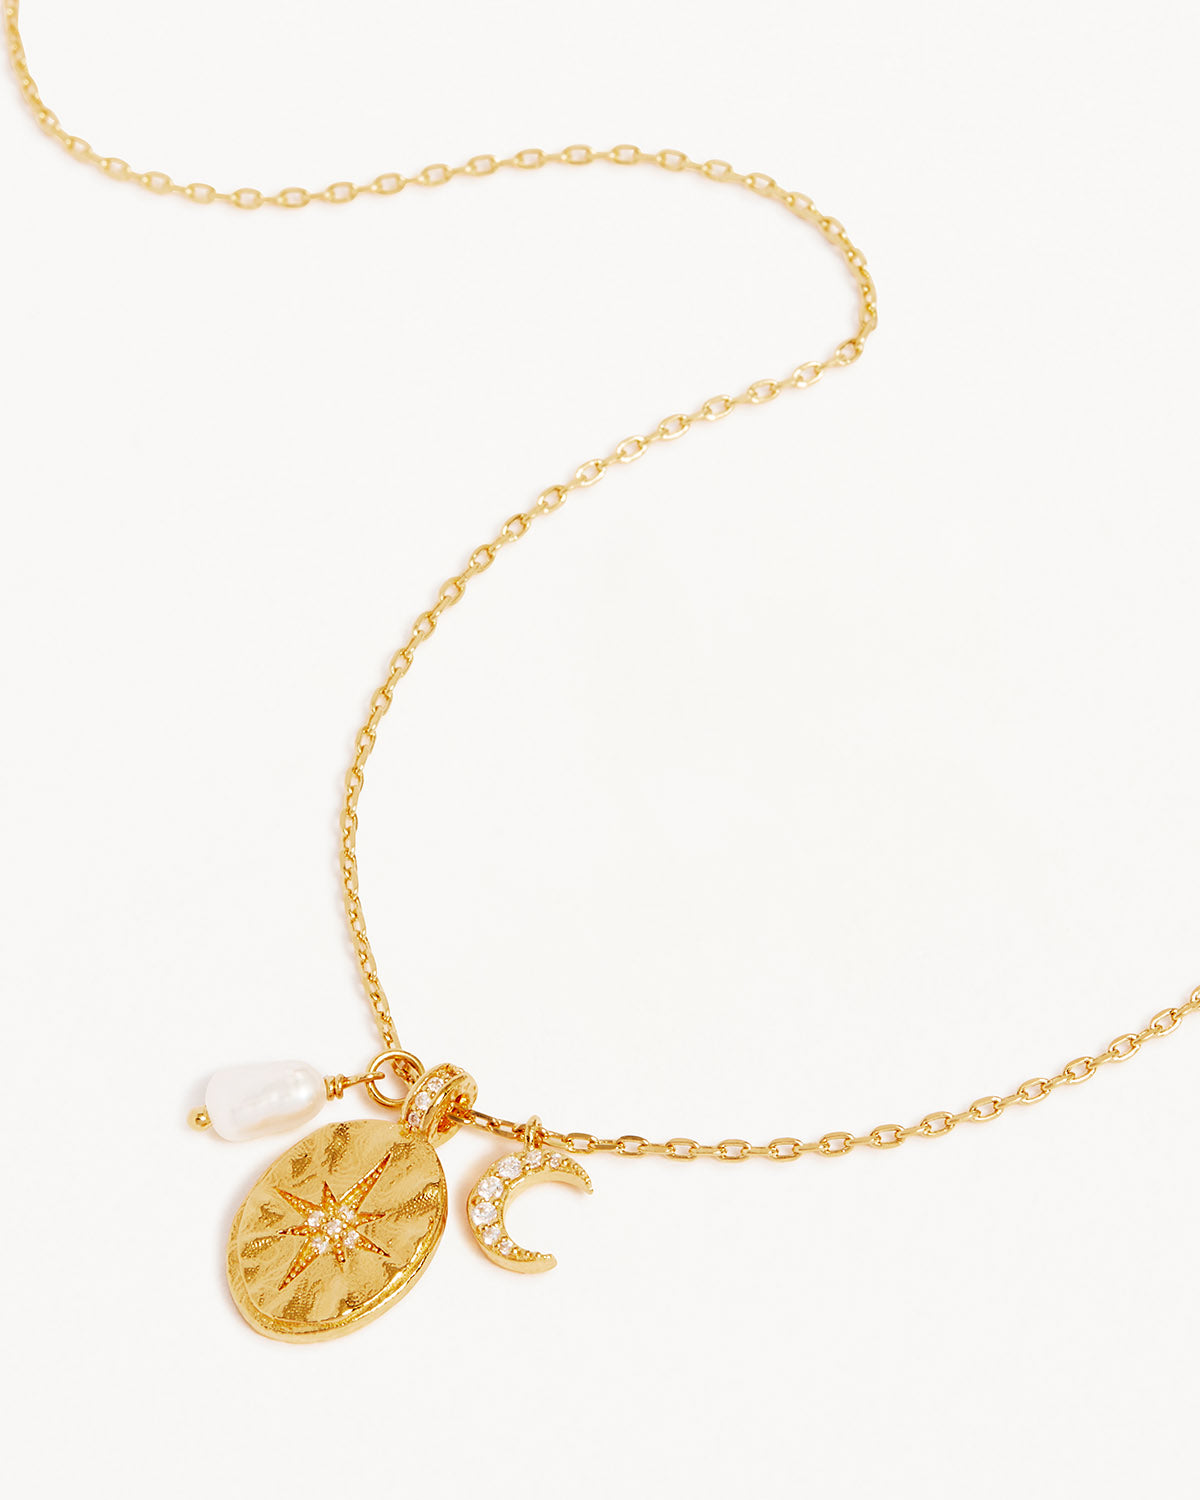 Dream Catcher Charm Online | Buy Dangling Gold Charm | STAC Fine Jewellery